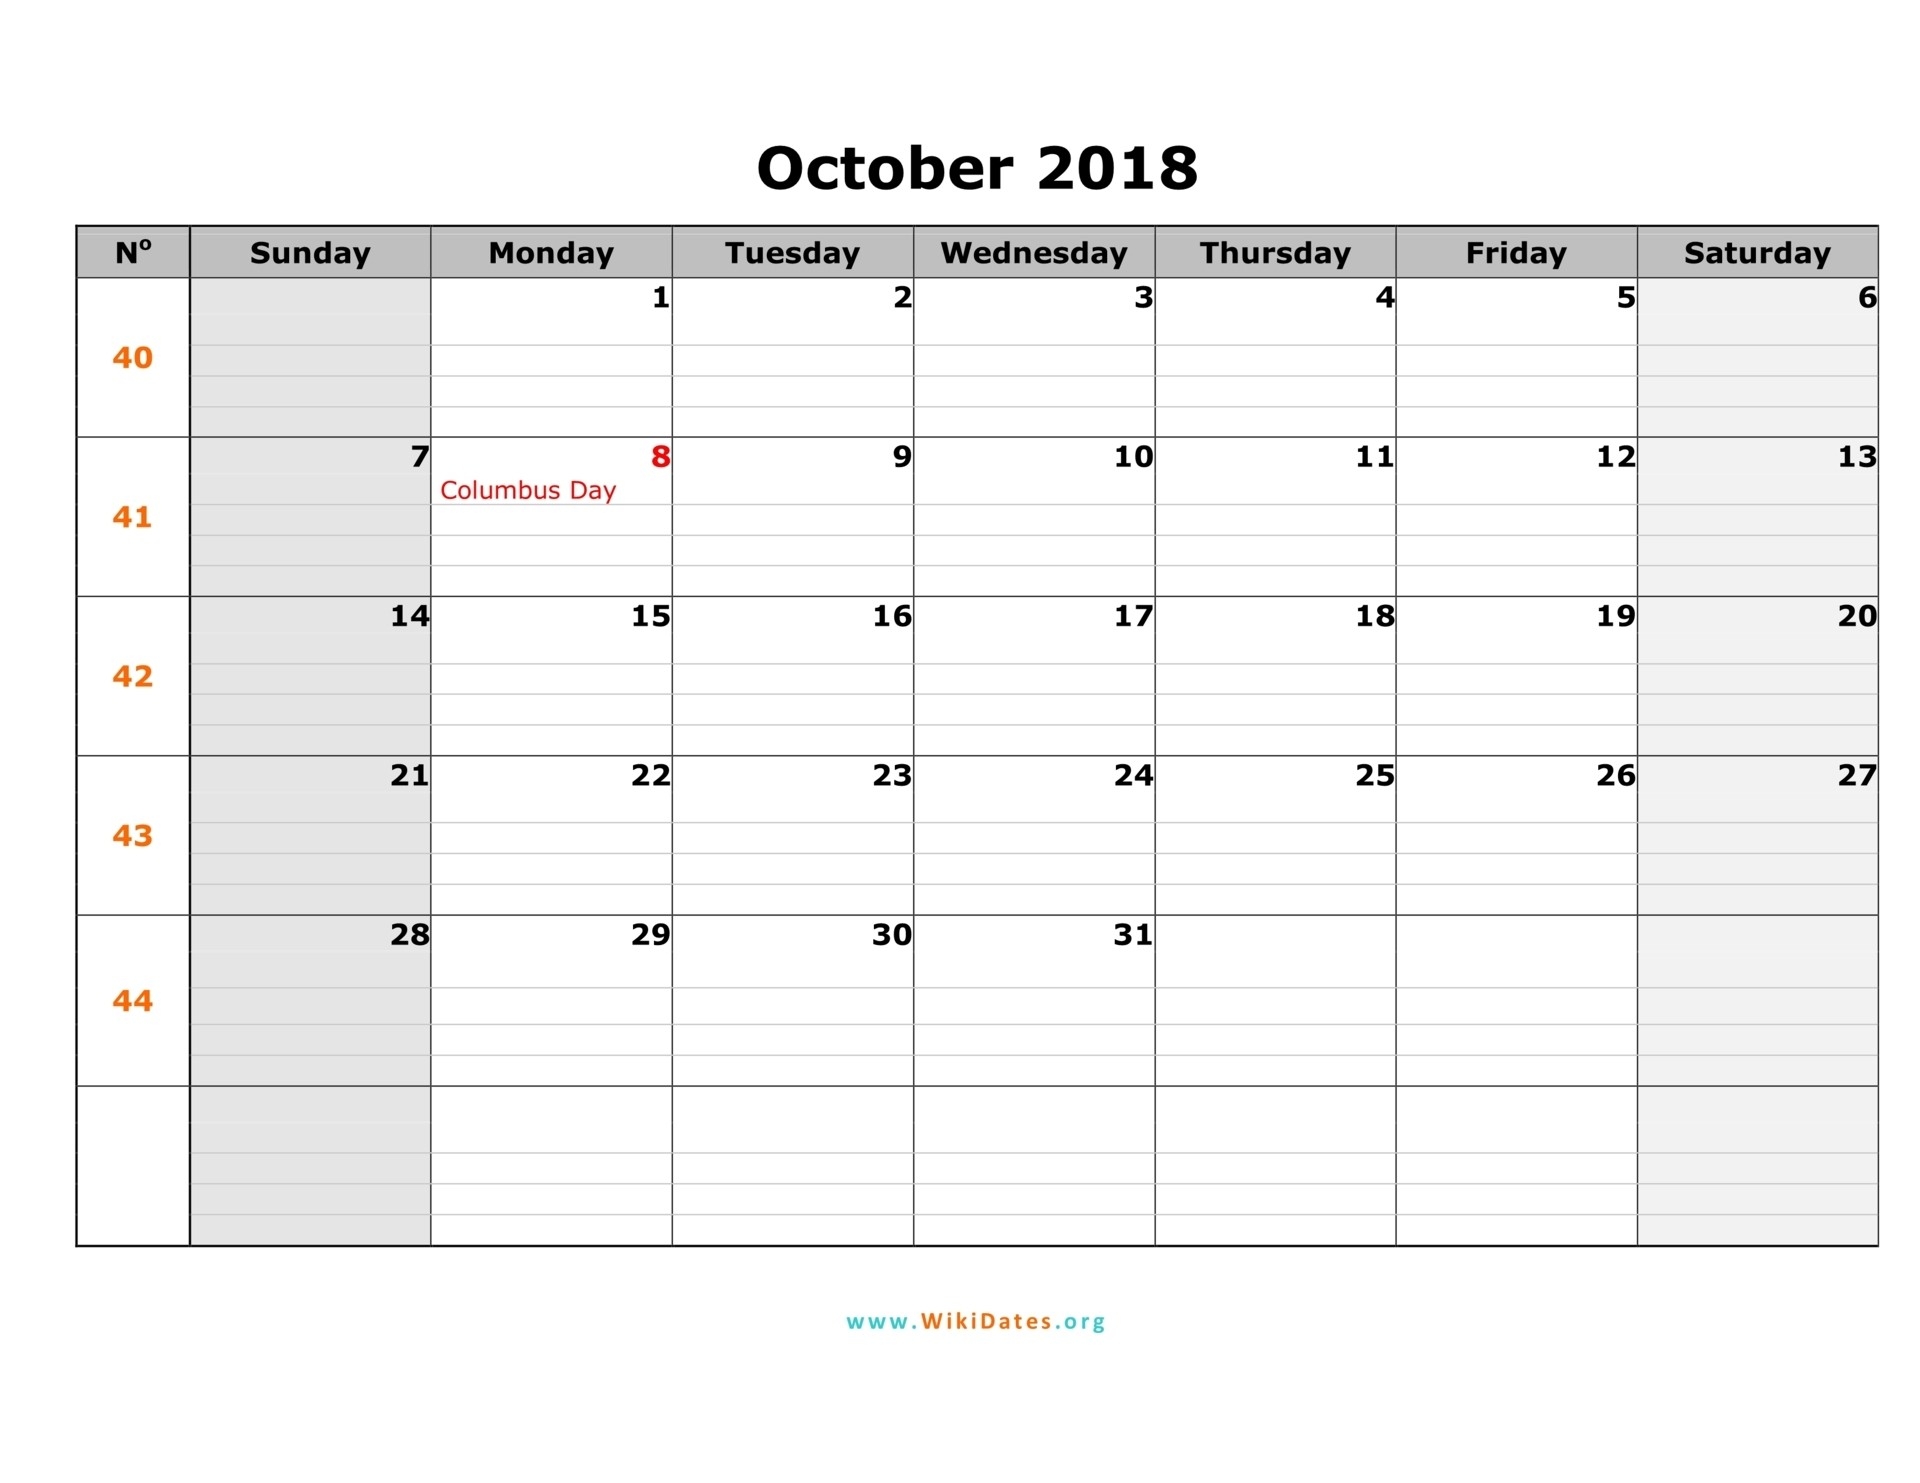 October 2018 Calendar | Wikidates-Blank Calendar Template Starting With Monday